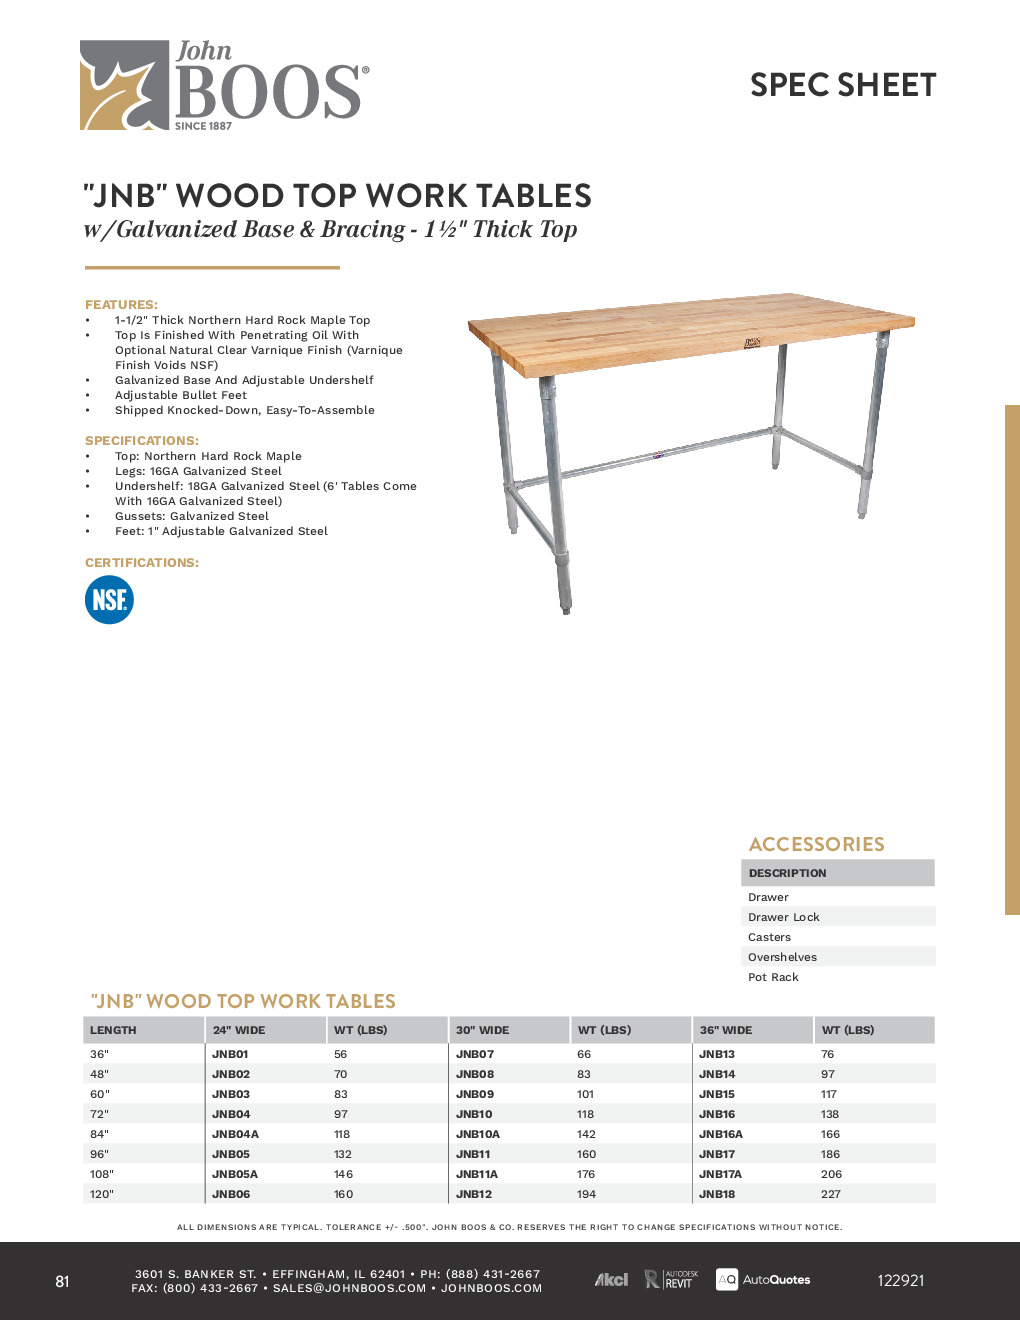 John Boos JNB05-X Wood Top Work Table